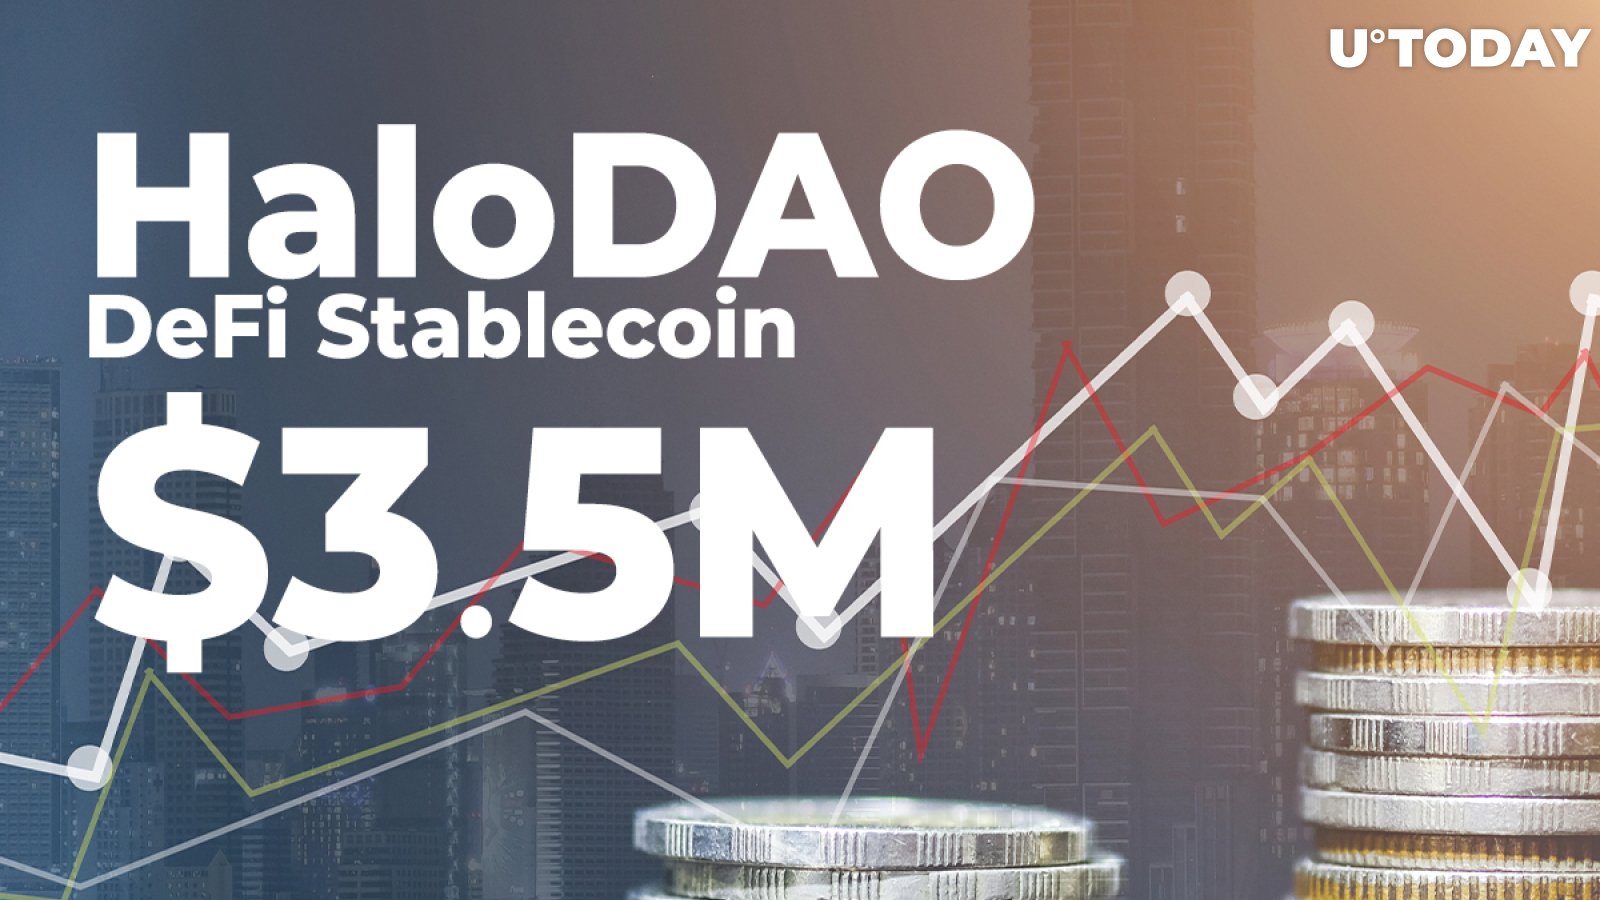 HaloDAO DeFi Stablecoin Platform Raises $3.5 Million from Parataxis, Spartan Group, Genesis Block Ventures